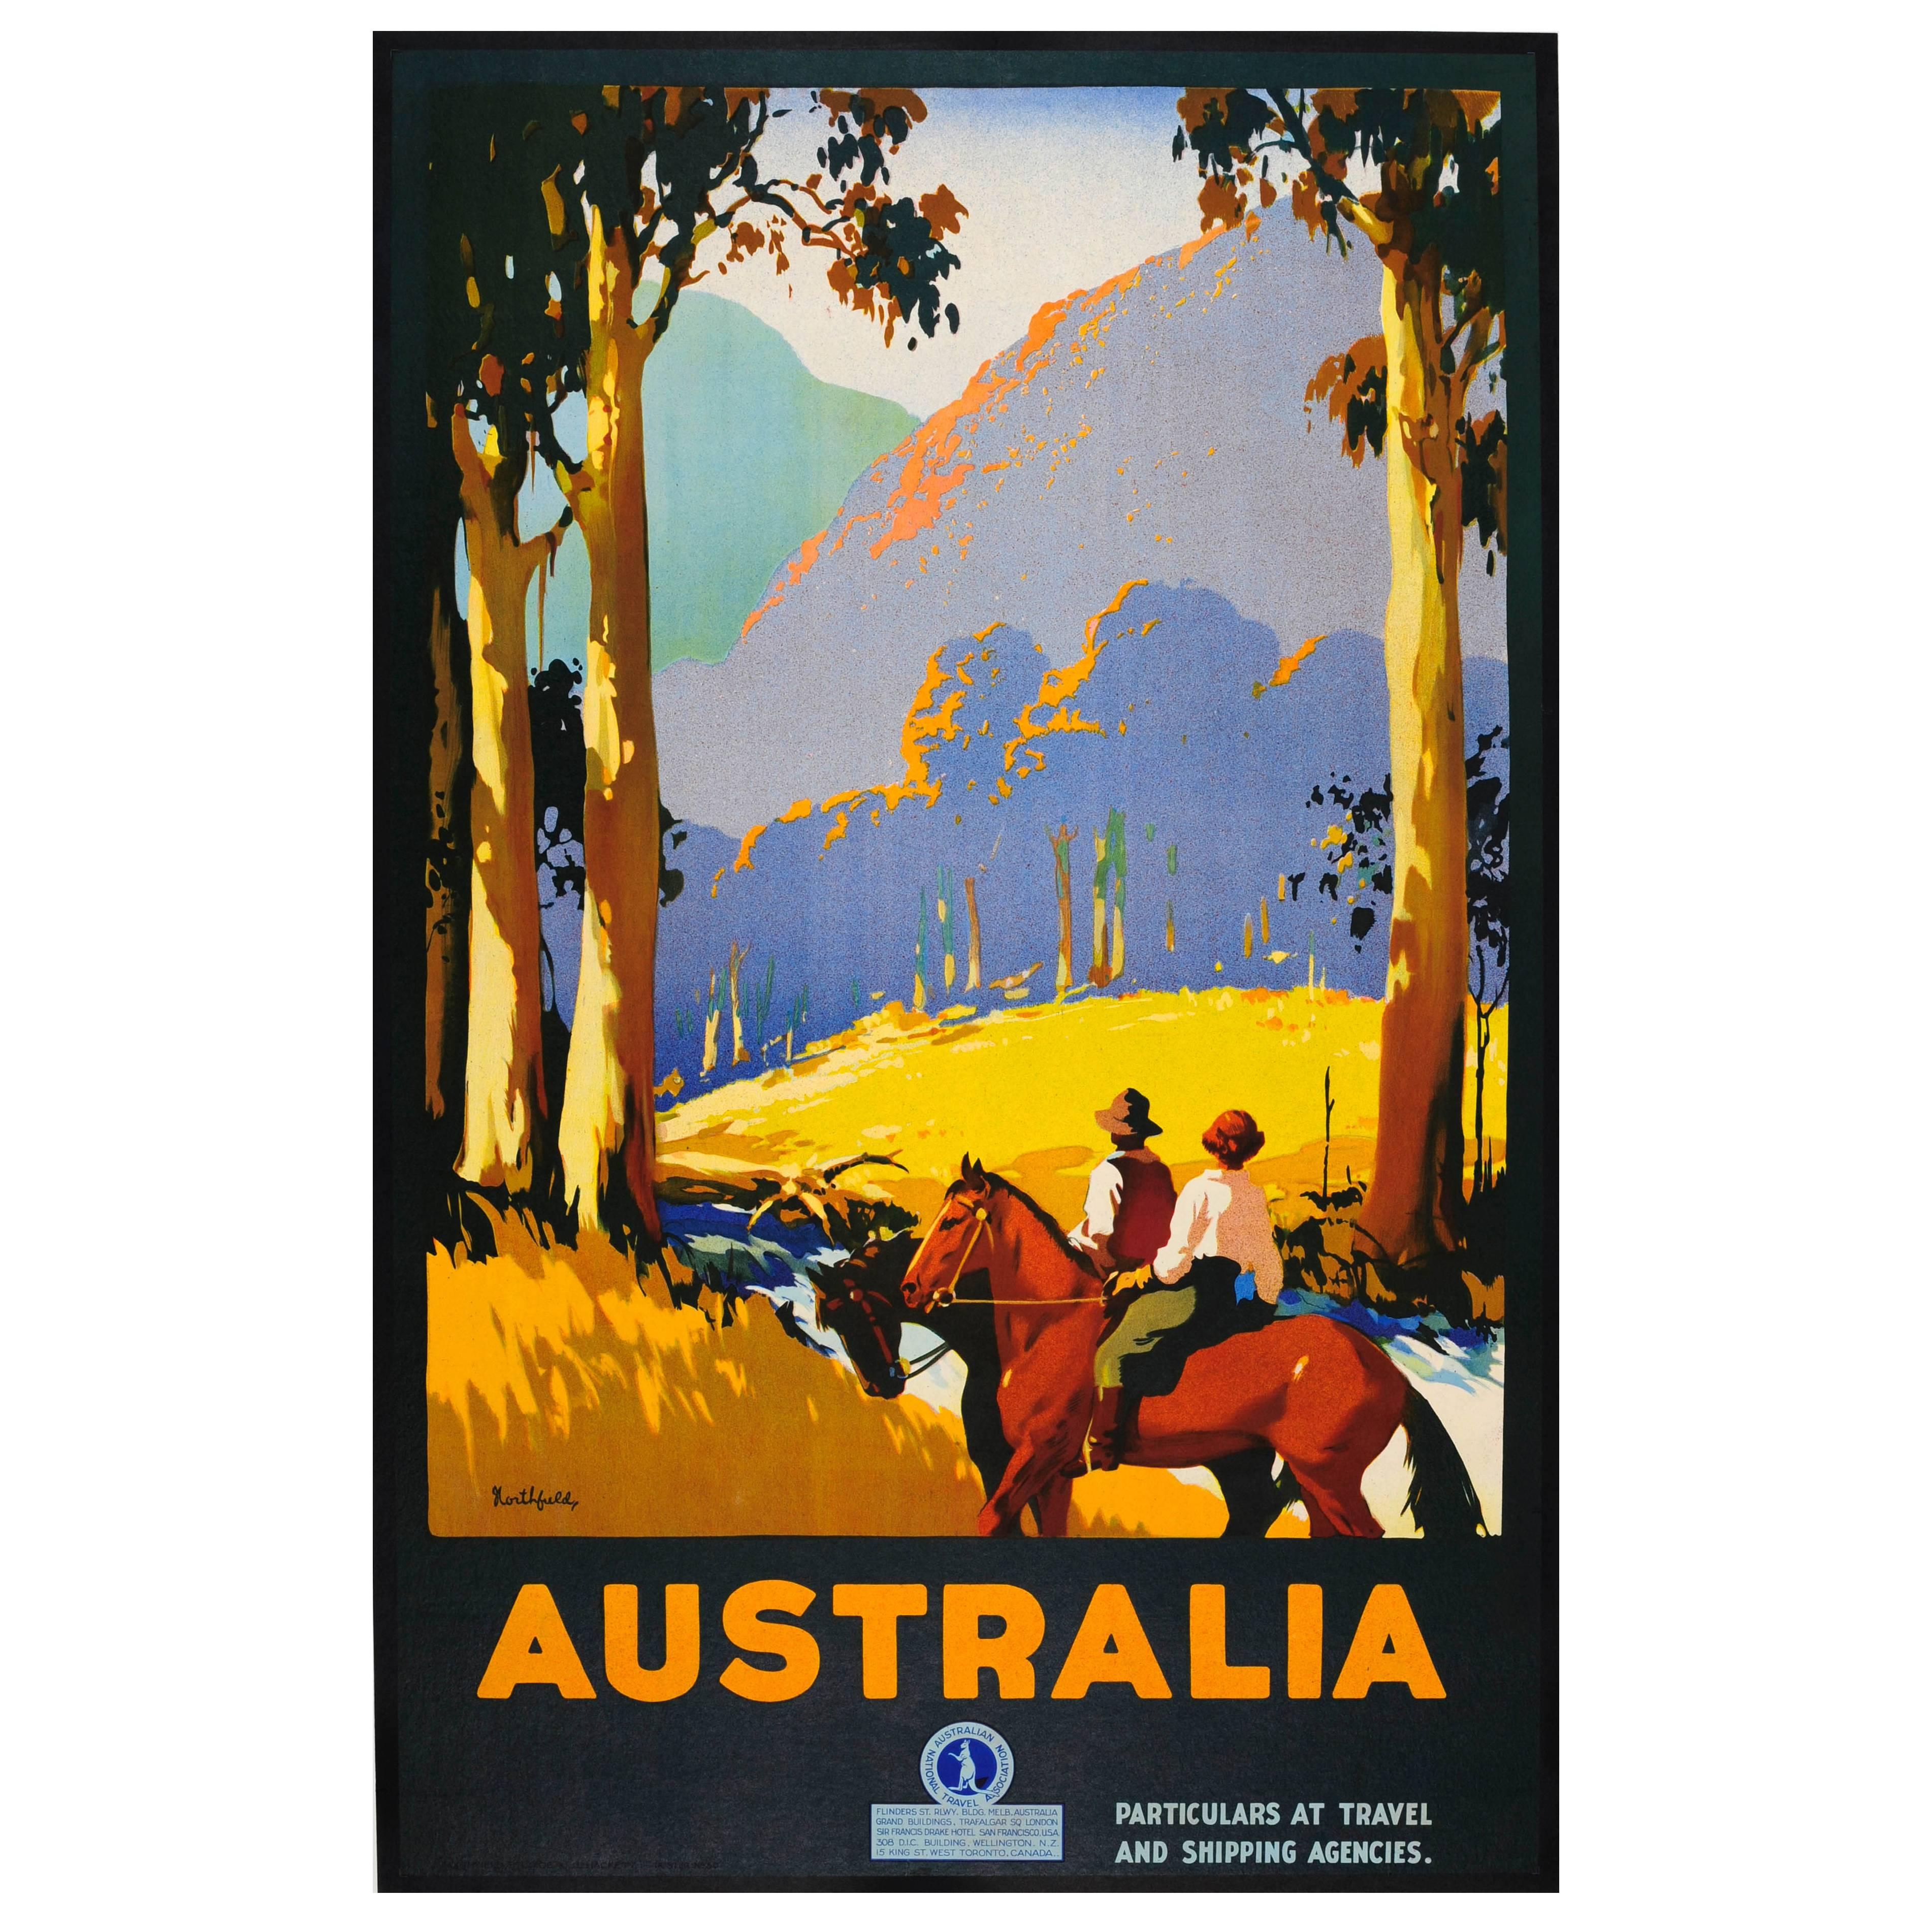 Original Vintage 1920s Travel Advertising Poster by James Northfield "Australia"